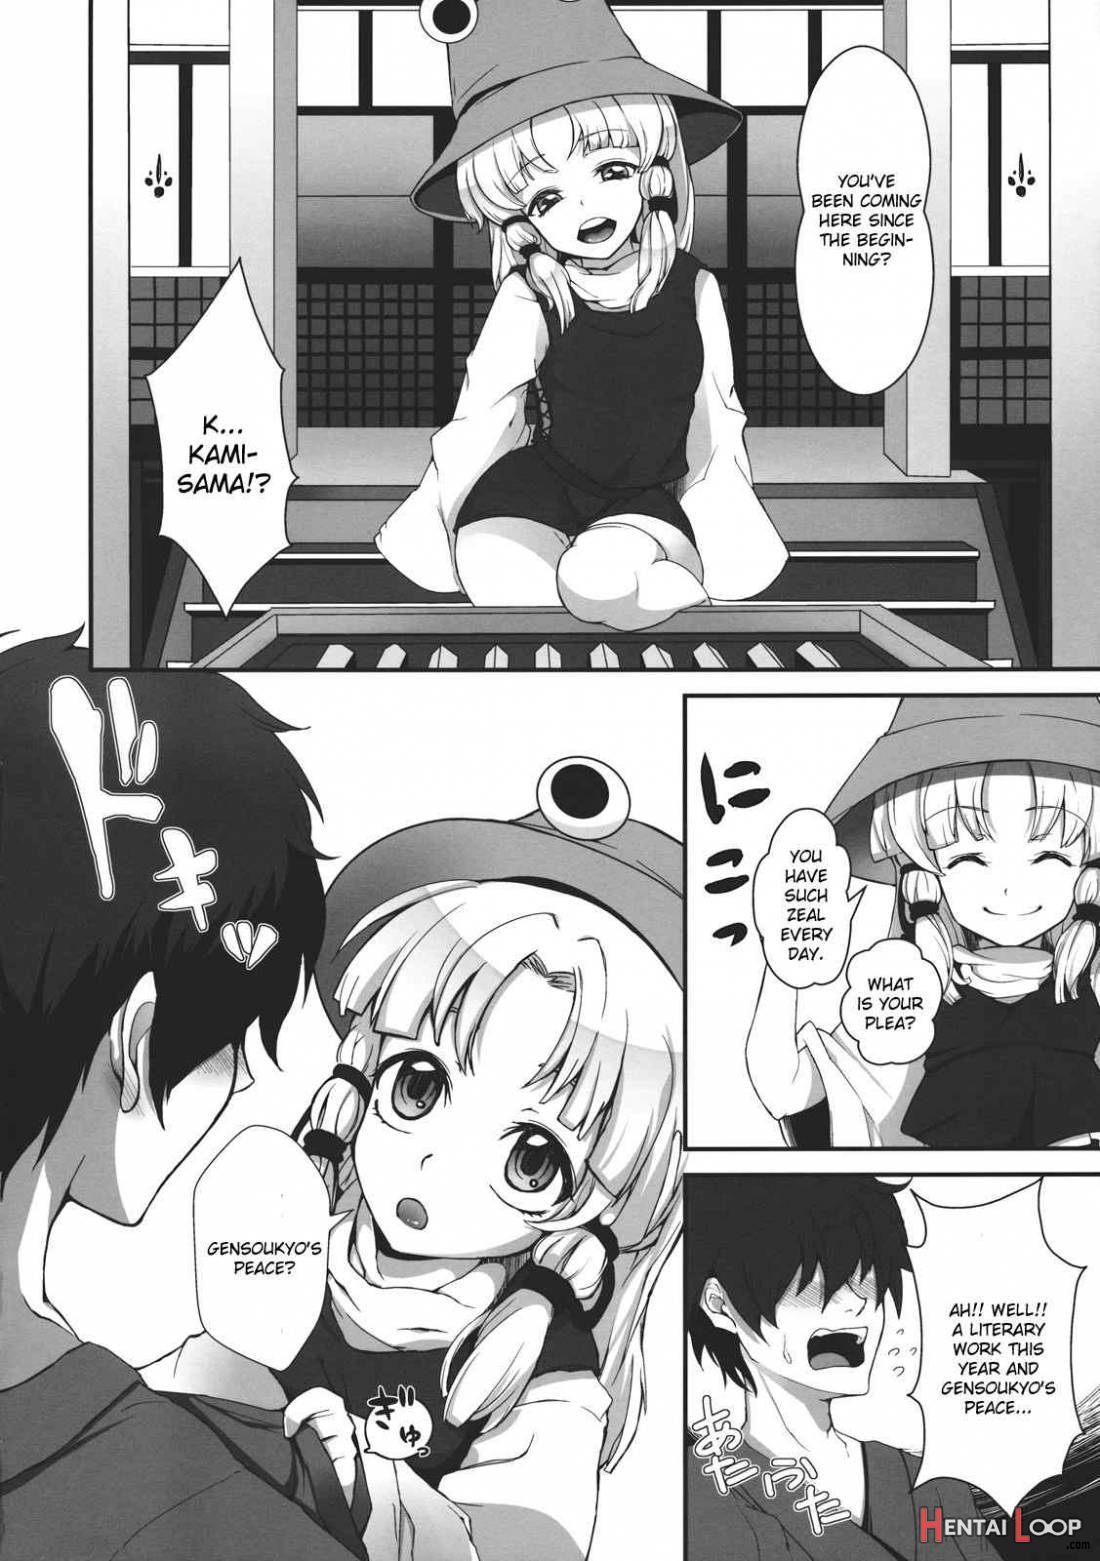 Super Hard Hatsujou Kero page 3